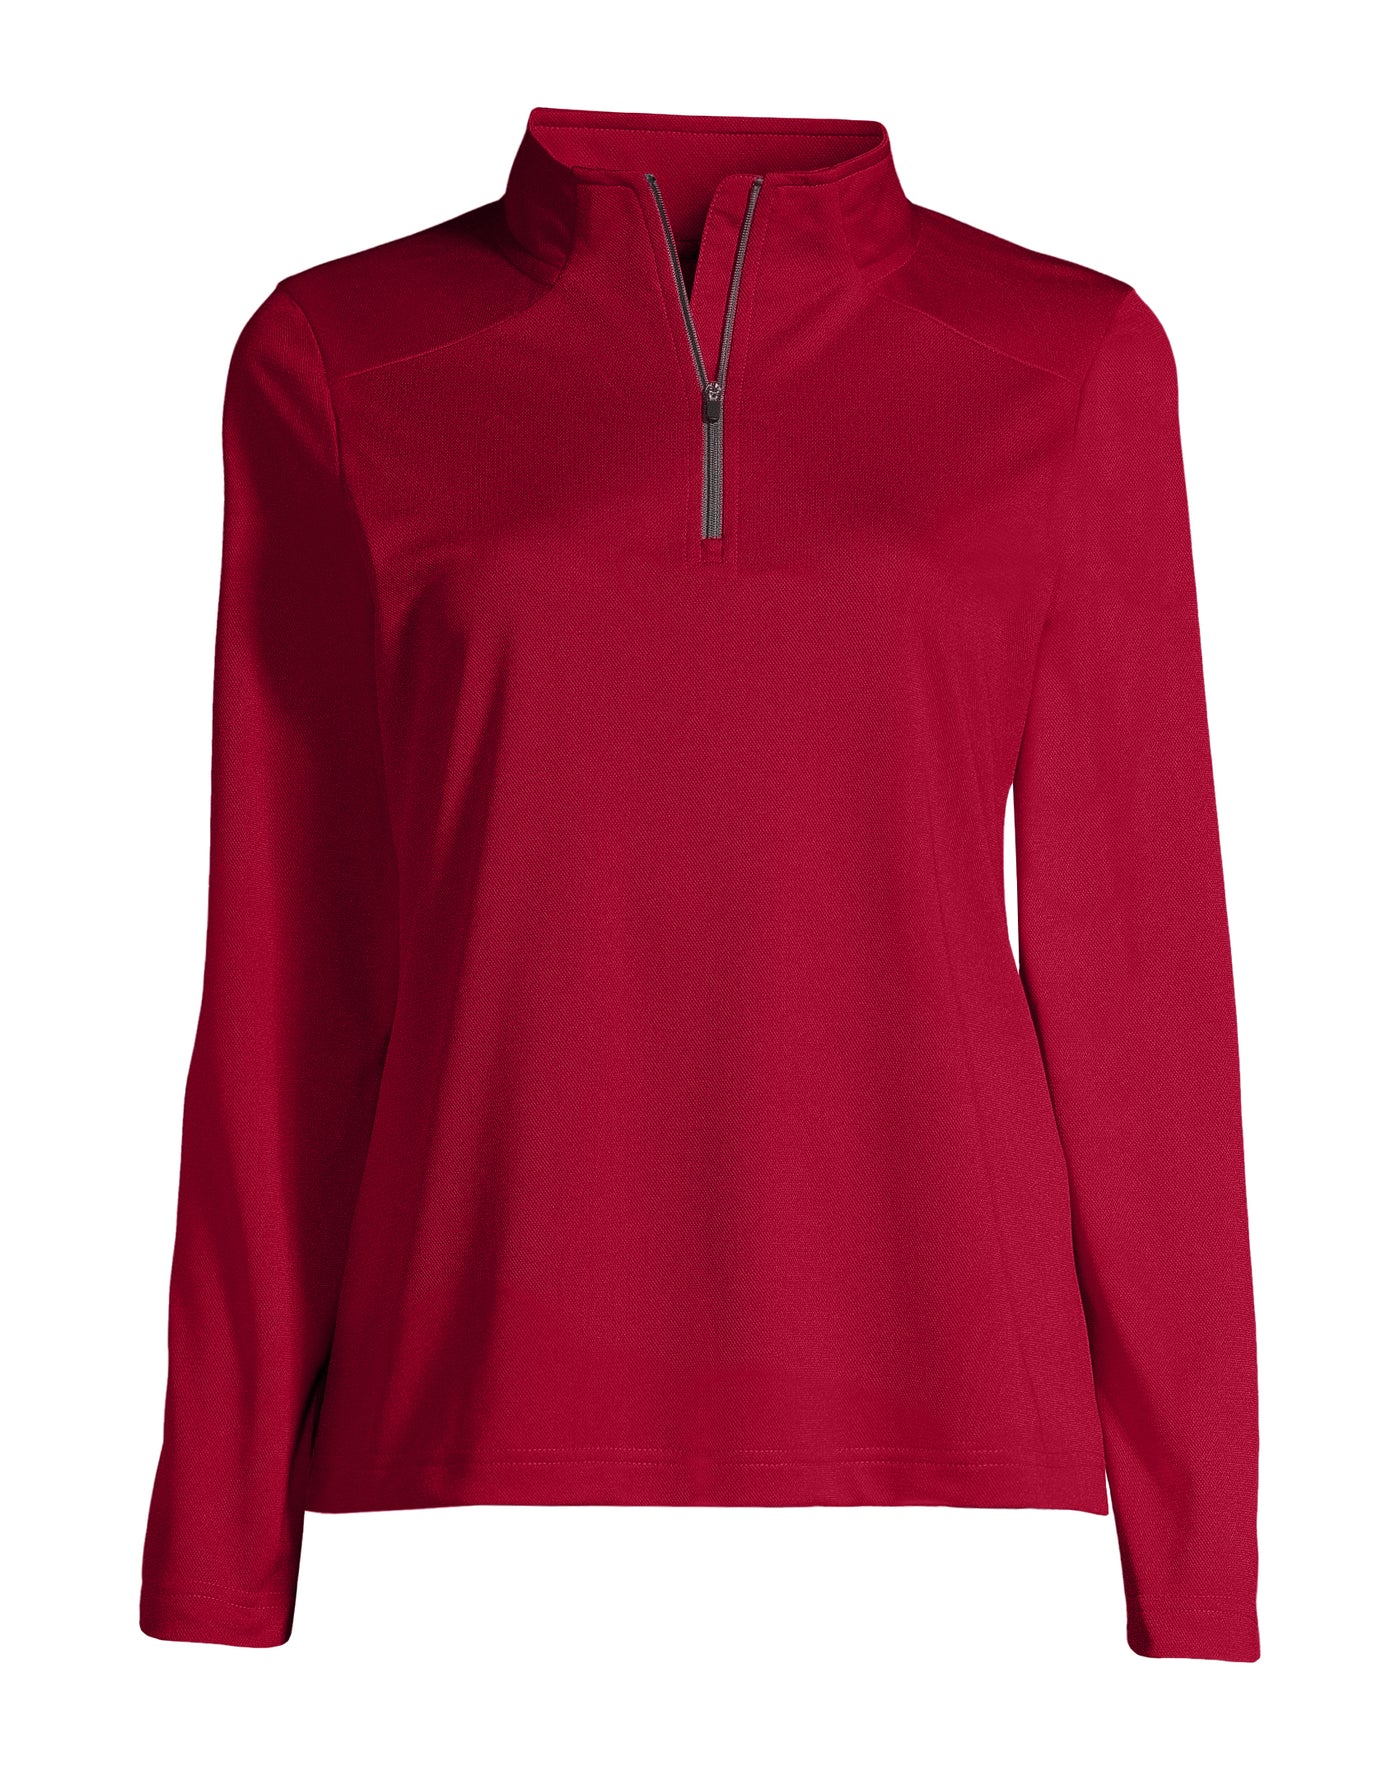 NWT Women's Snoga Athletics Shirt 1/4 Zip Pink Size Extra Small XS